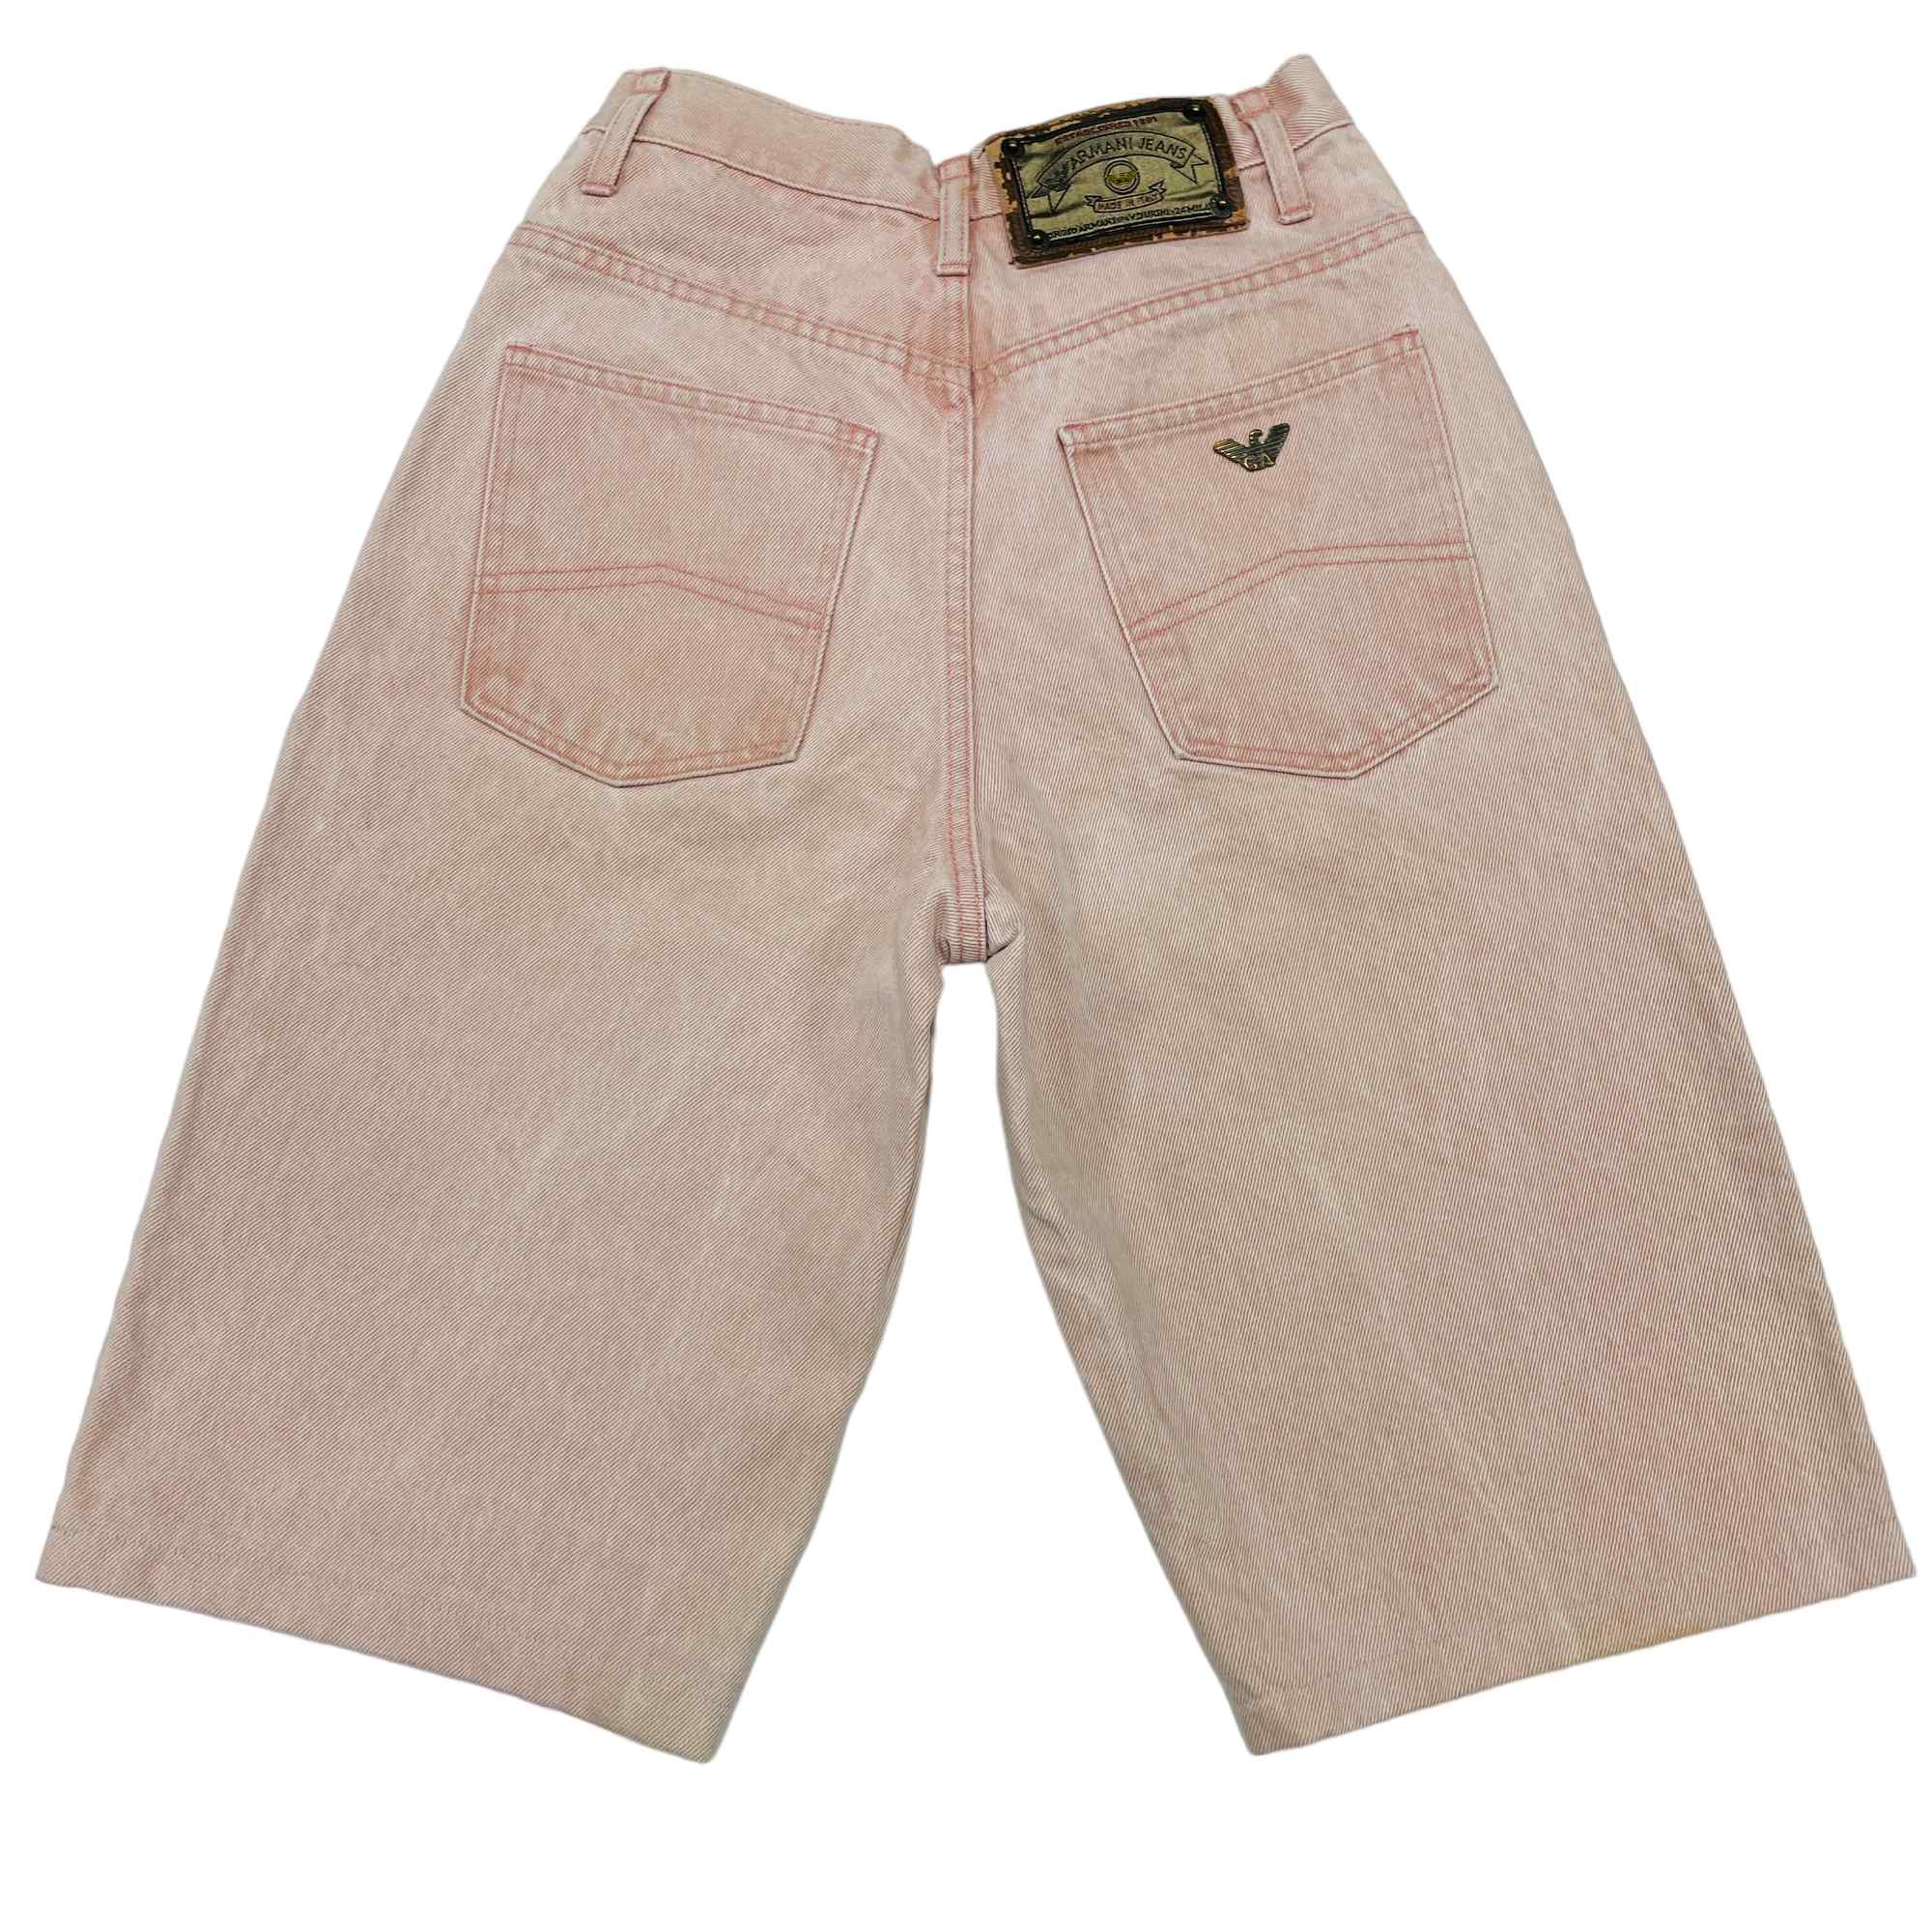 Armani Jeans Denim Shorts - W24